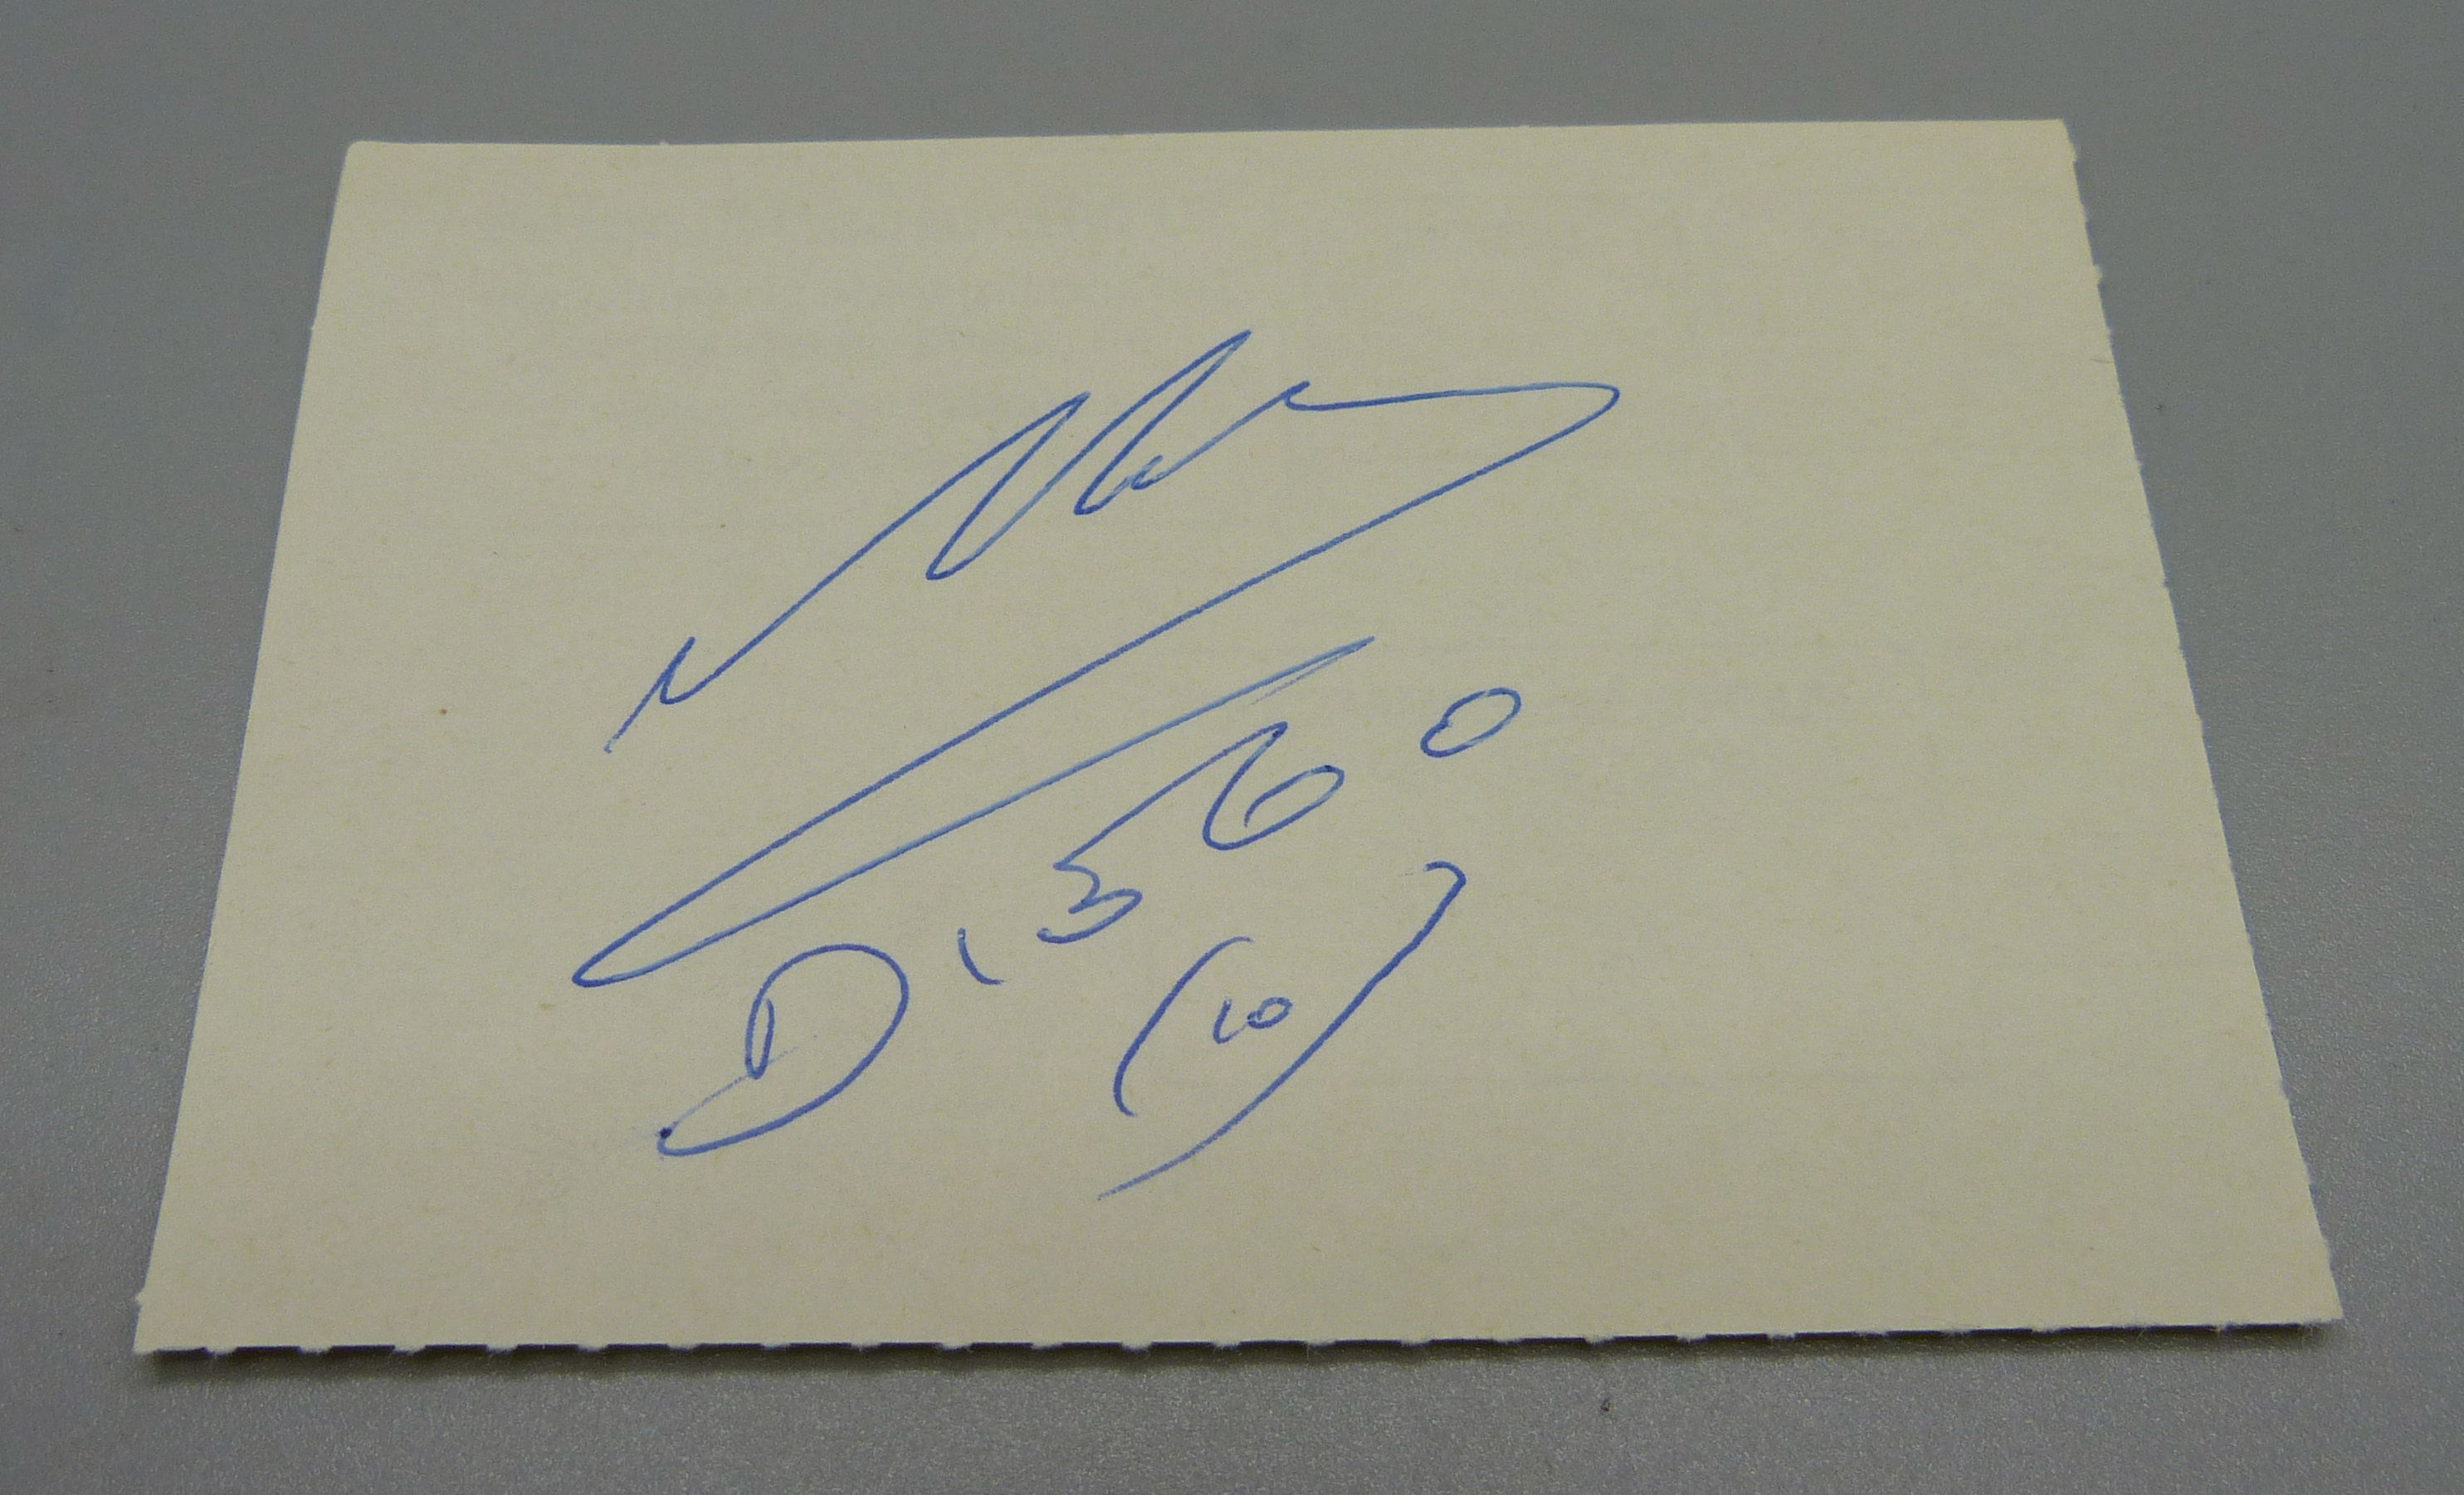 A Maradona autographed page, on a flight boarding pass